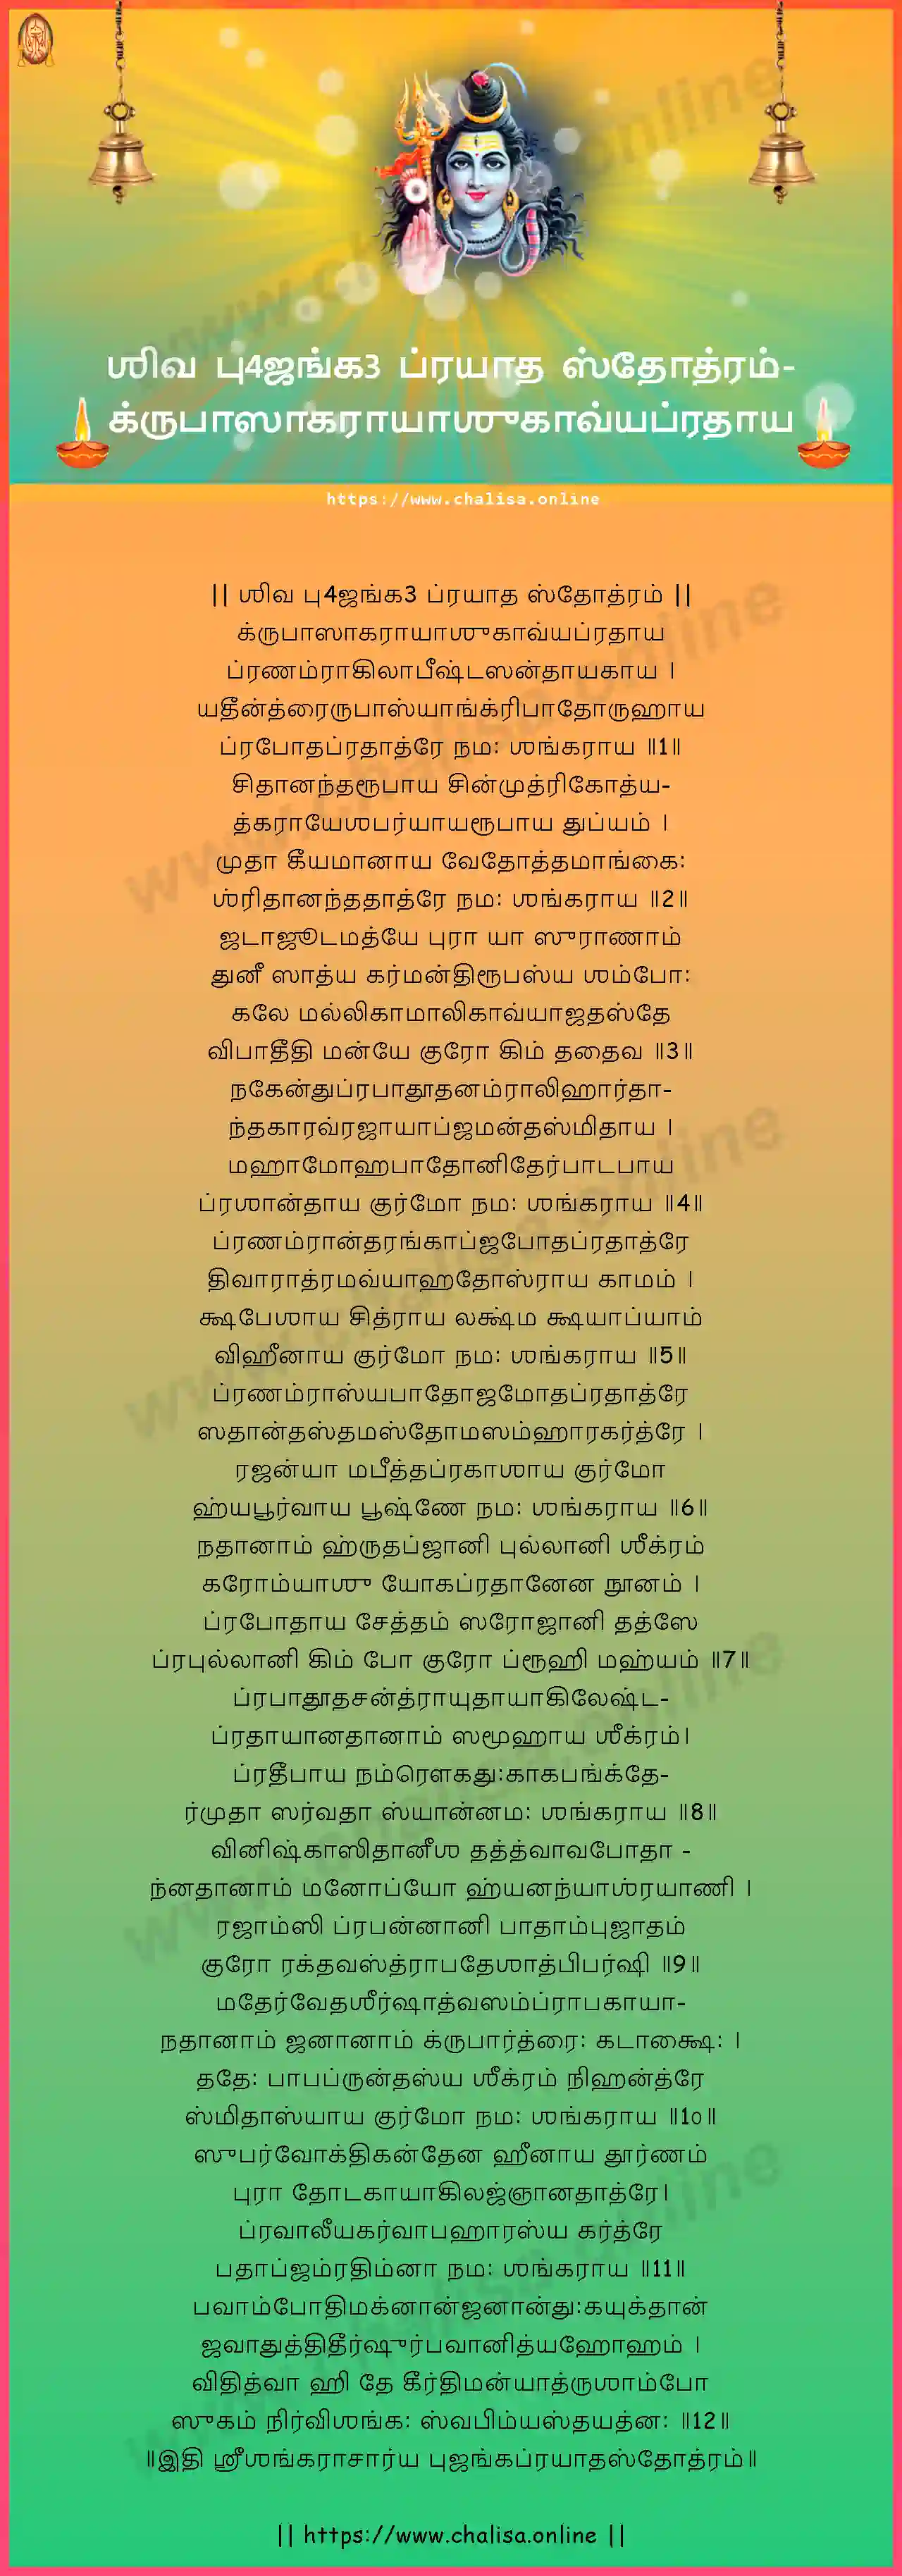 krpasagarayasukavyapradaya-shiva-bhujanga-prayata-stotram-tamil-tamil-lyrics-download